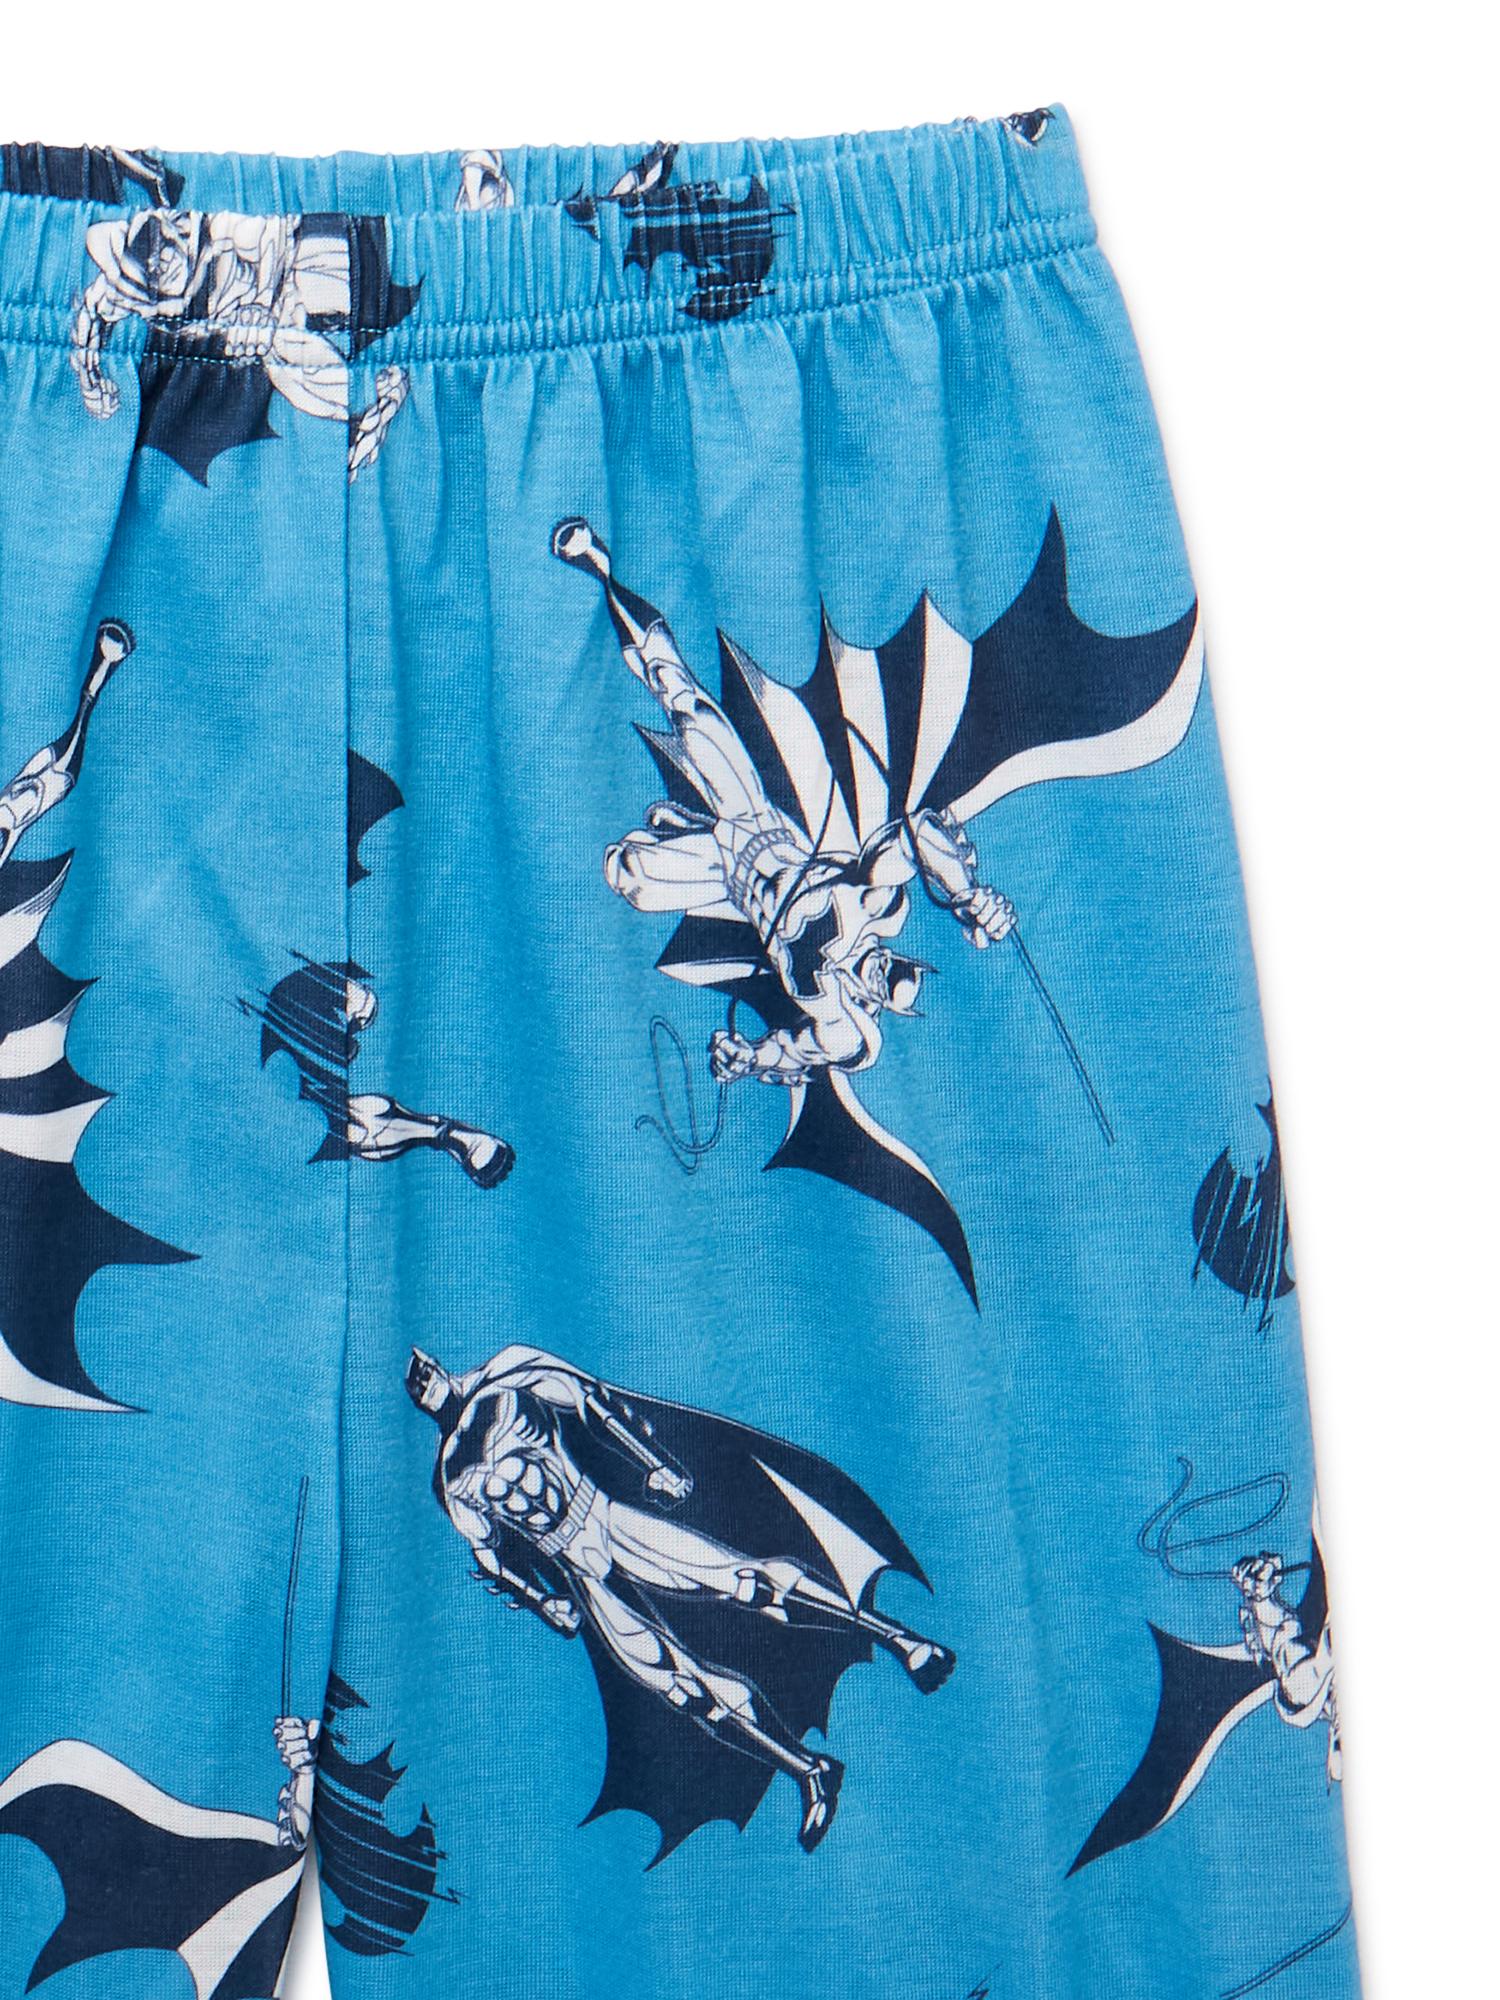 License Boys Short Sleeve Top and Shorts Pajama Set, 2-Piece, Sizes 4-12 - image 3 of 3